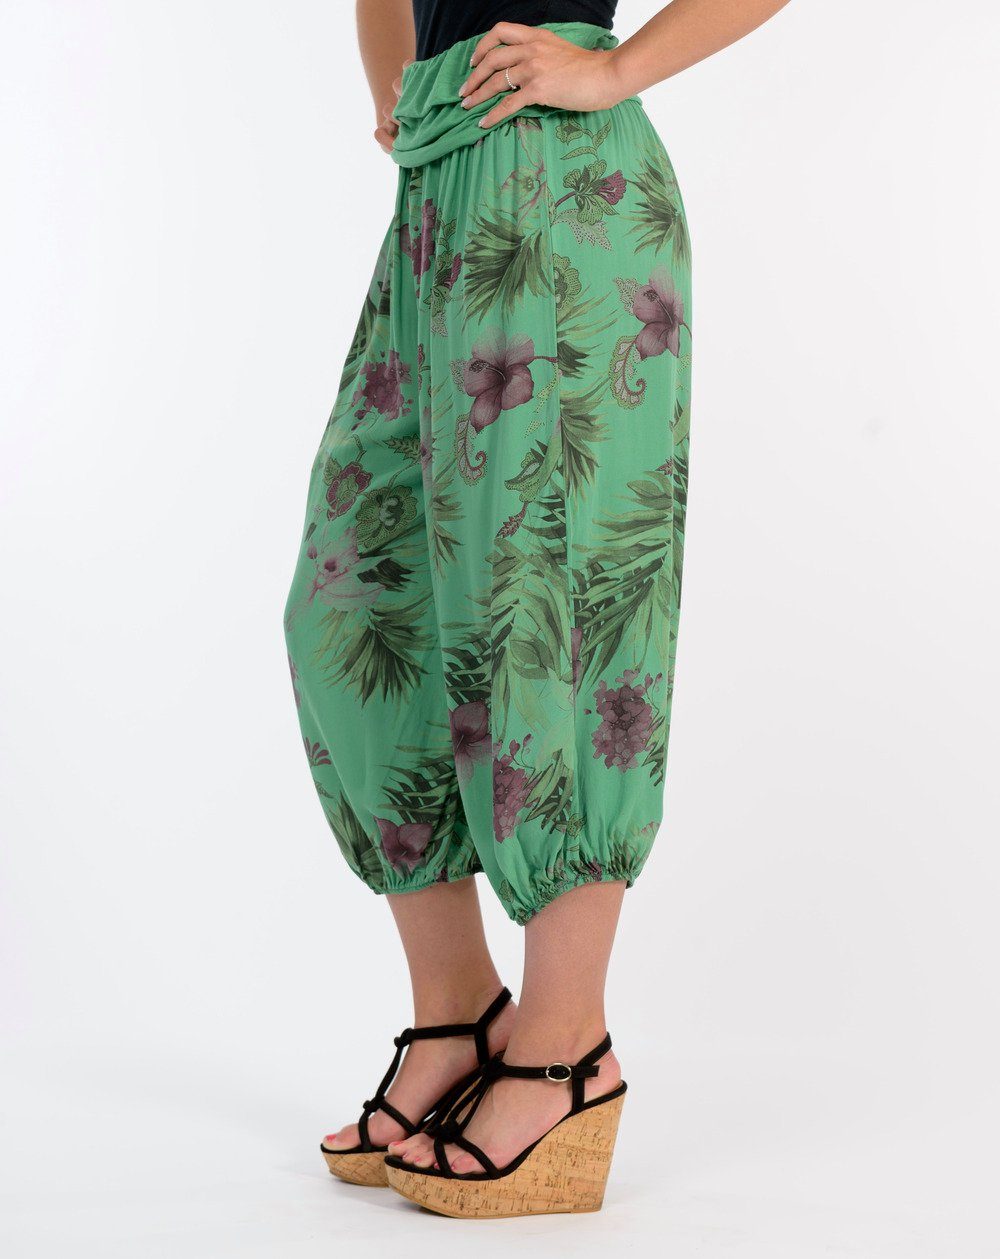 malito more than fashion Aladinhose mit Einheitsgröße floralem Muster Haremshose grün 8938